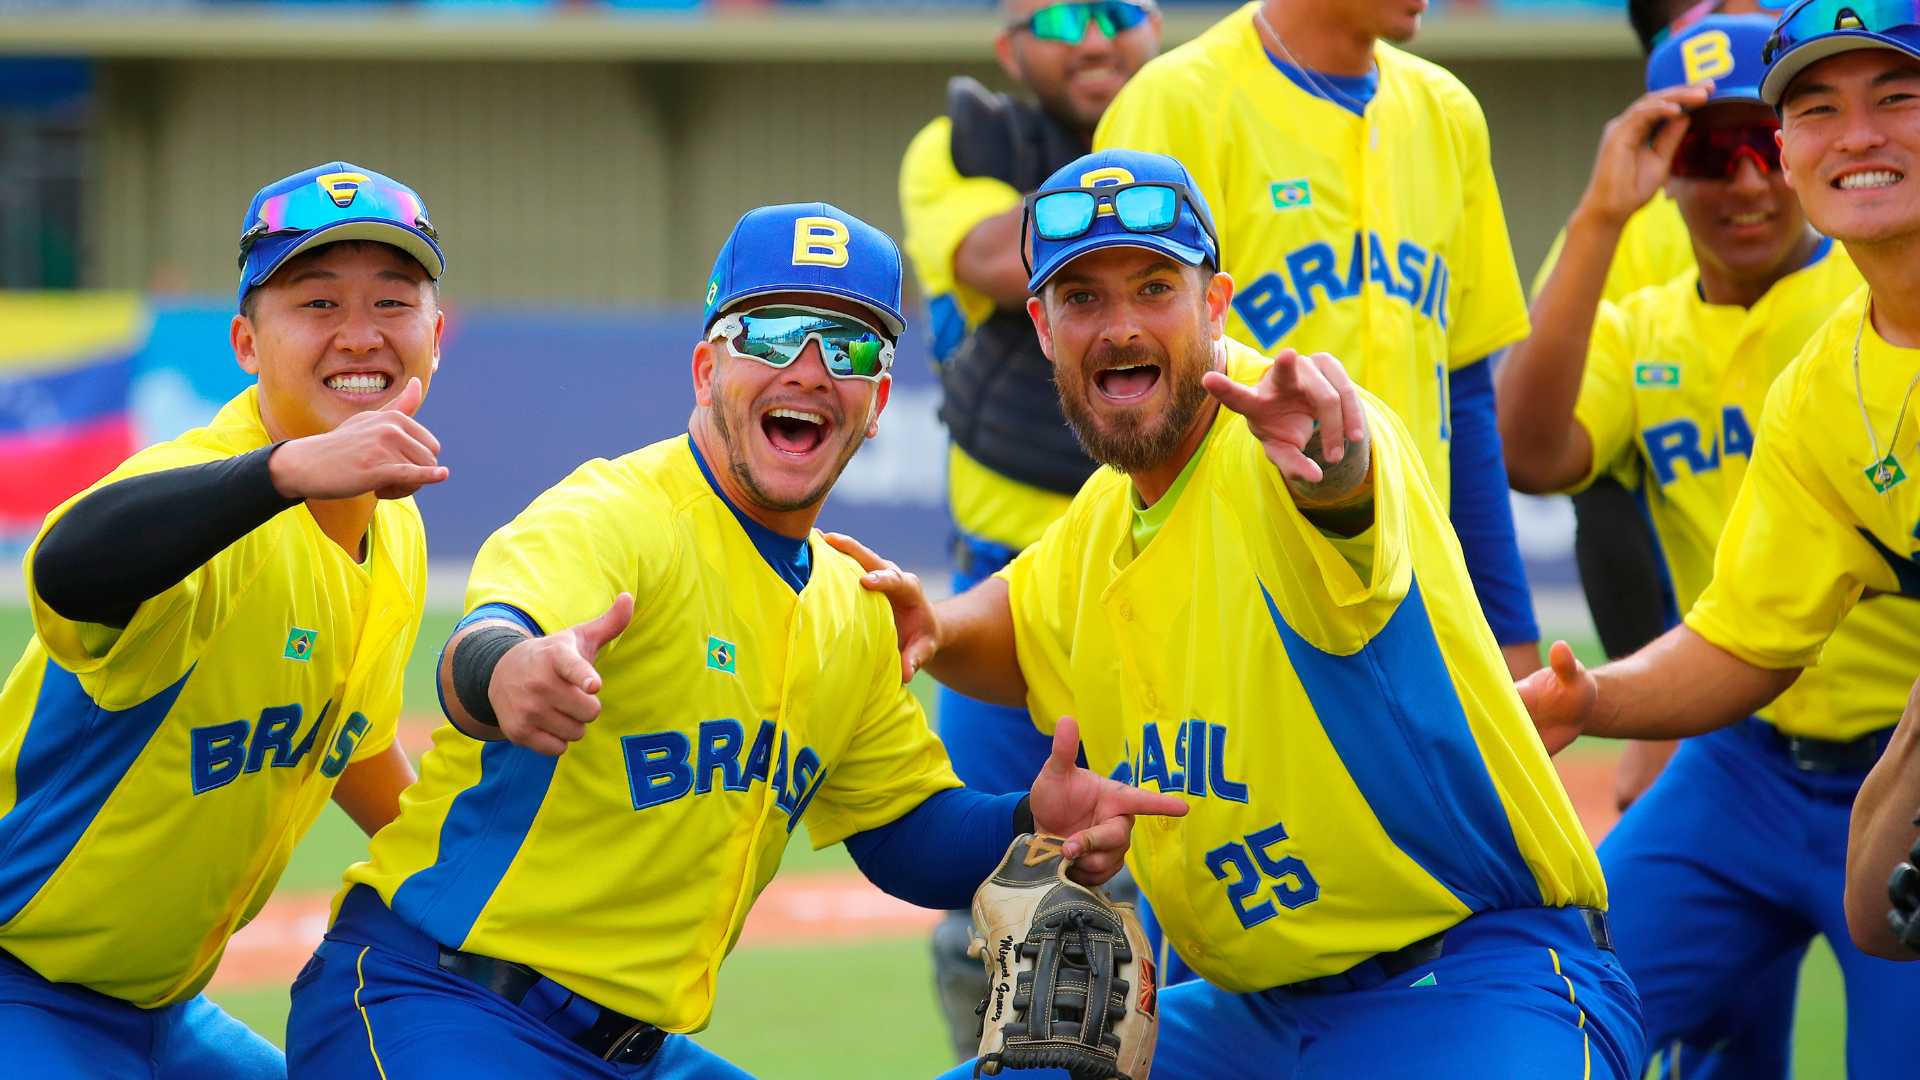 Brazil surprised Venezuela in Pan American baseball